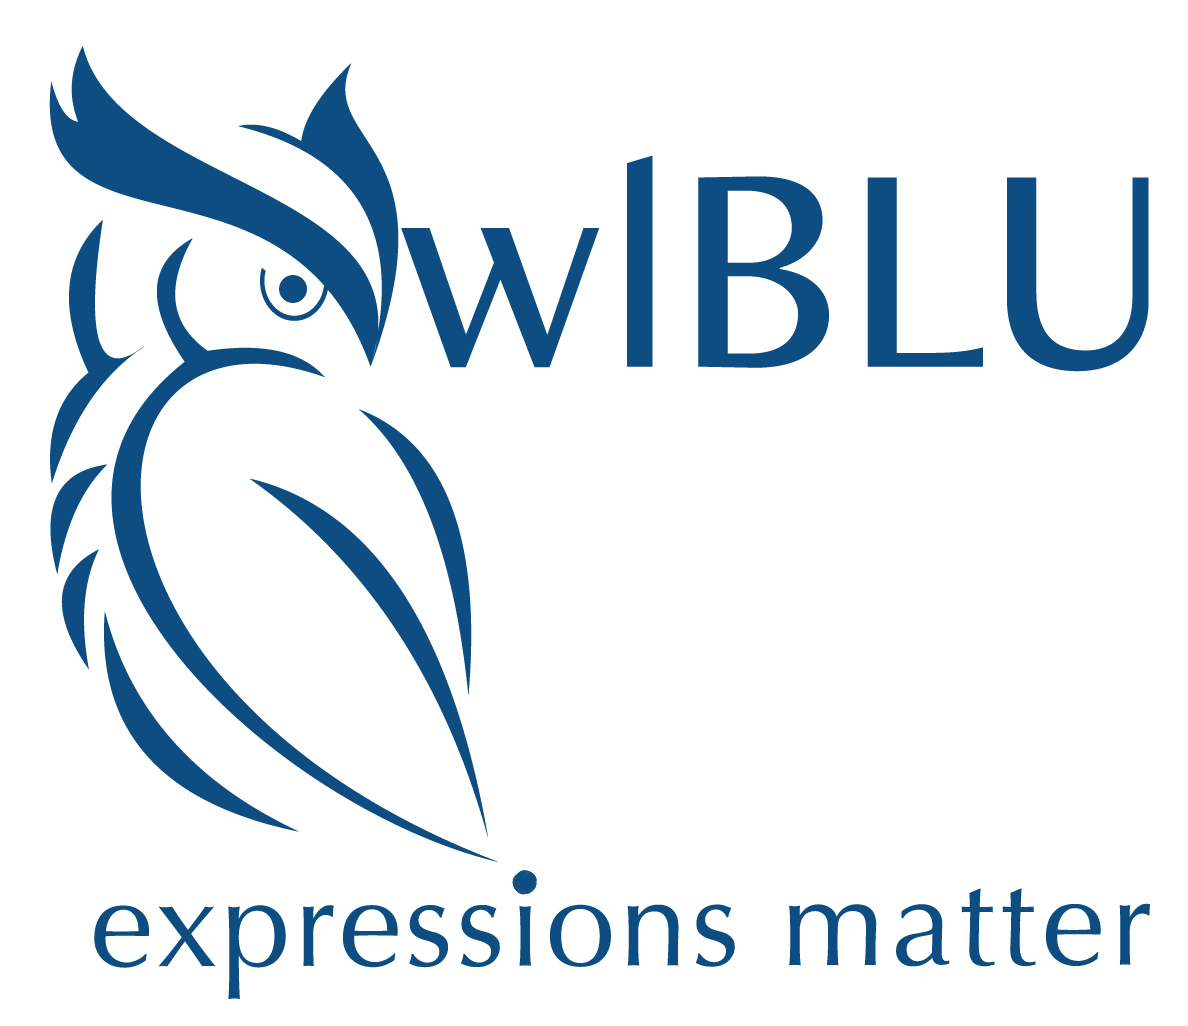 owlBLU website logo